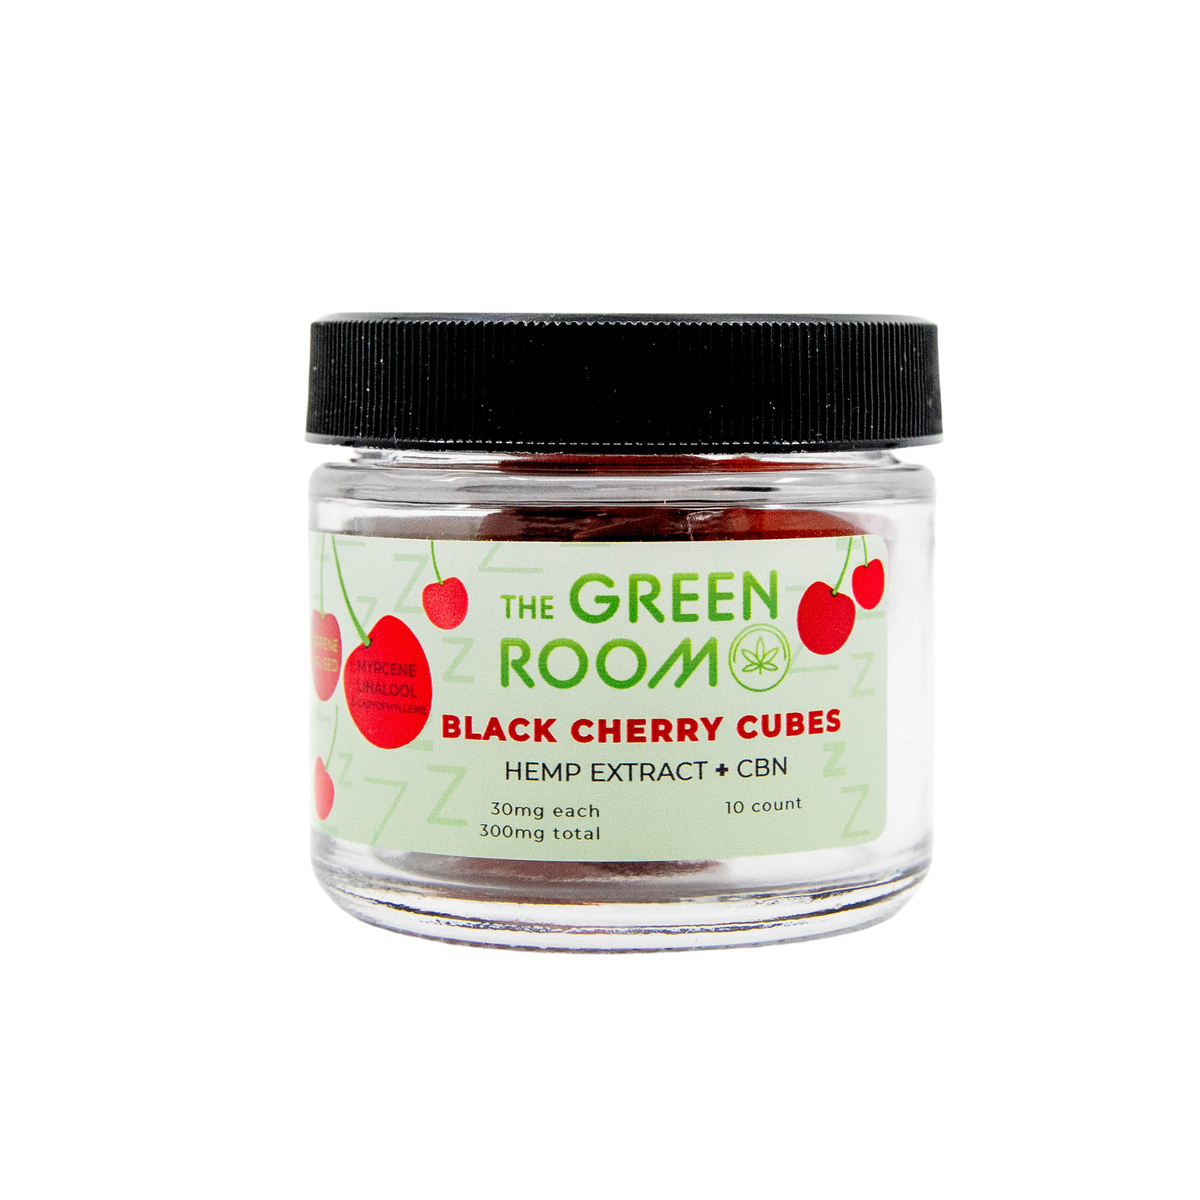 Black Cherry Cubes